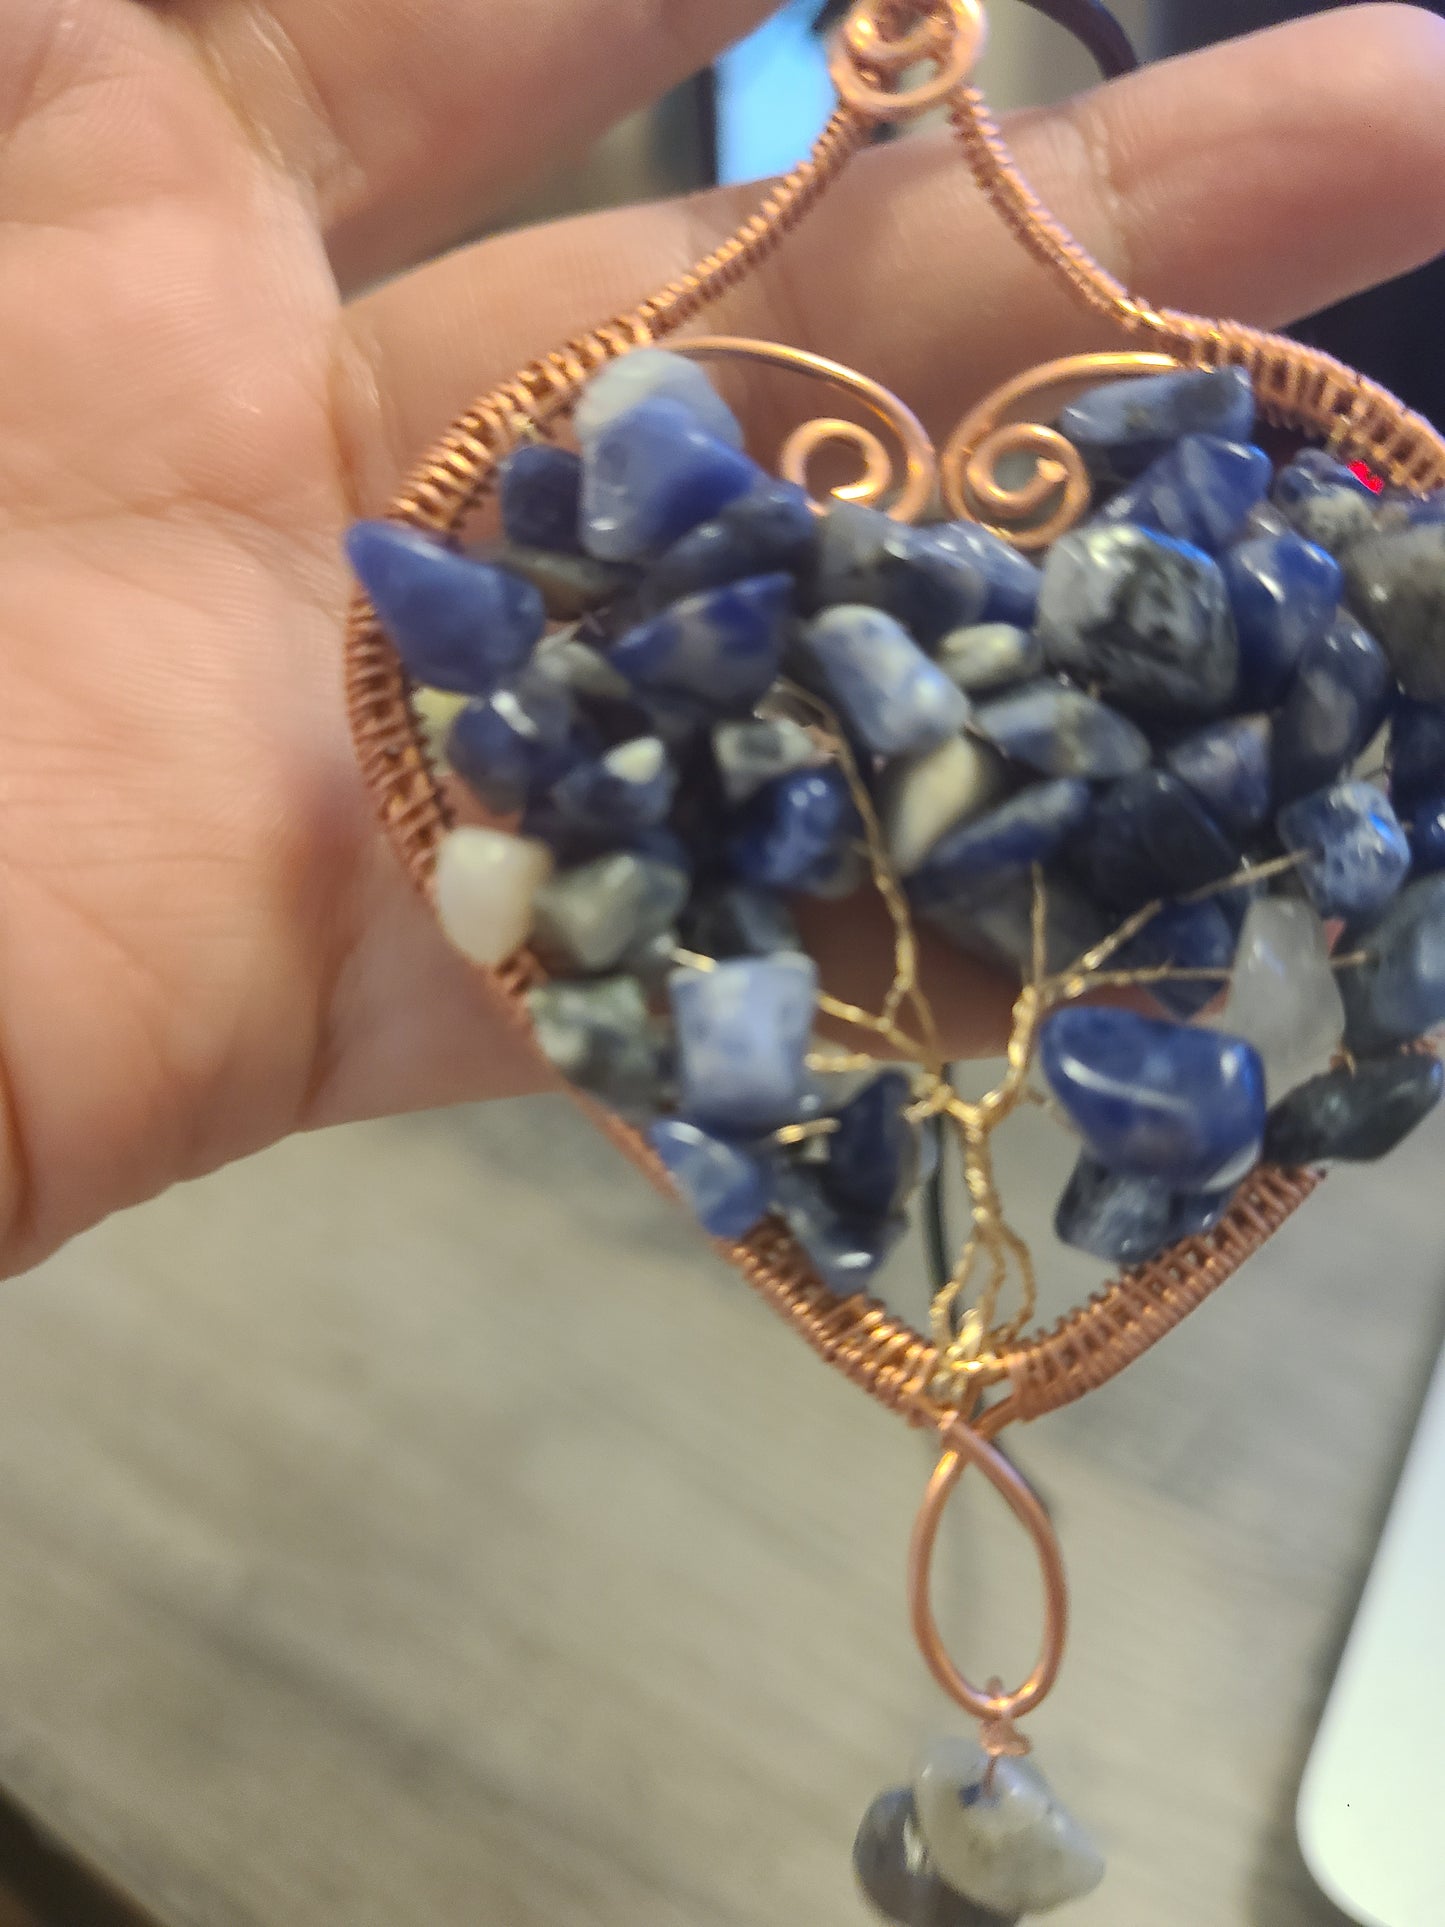 Heart Shaped Tree of Life Gemstone Pendant